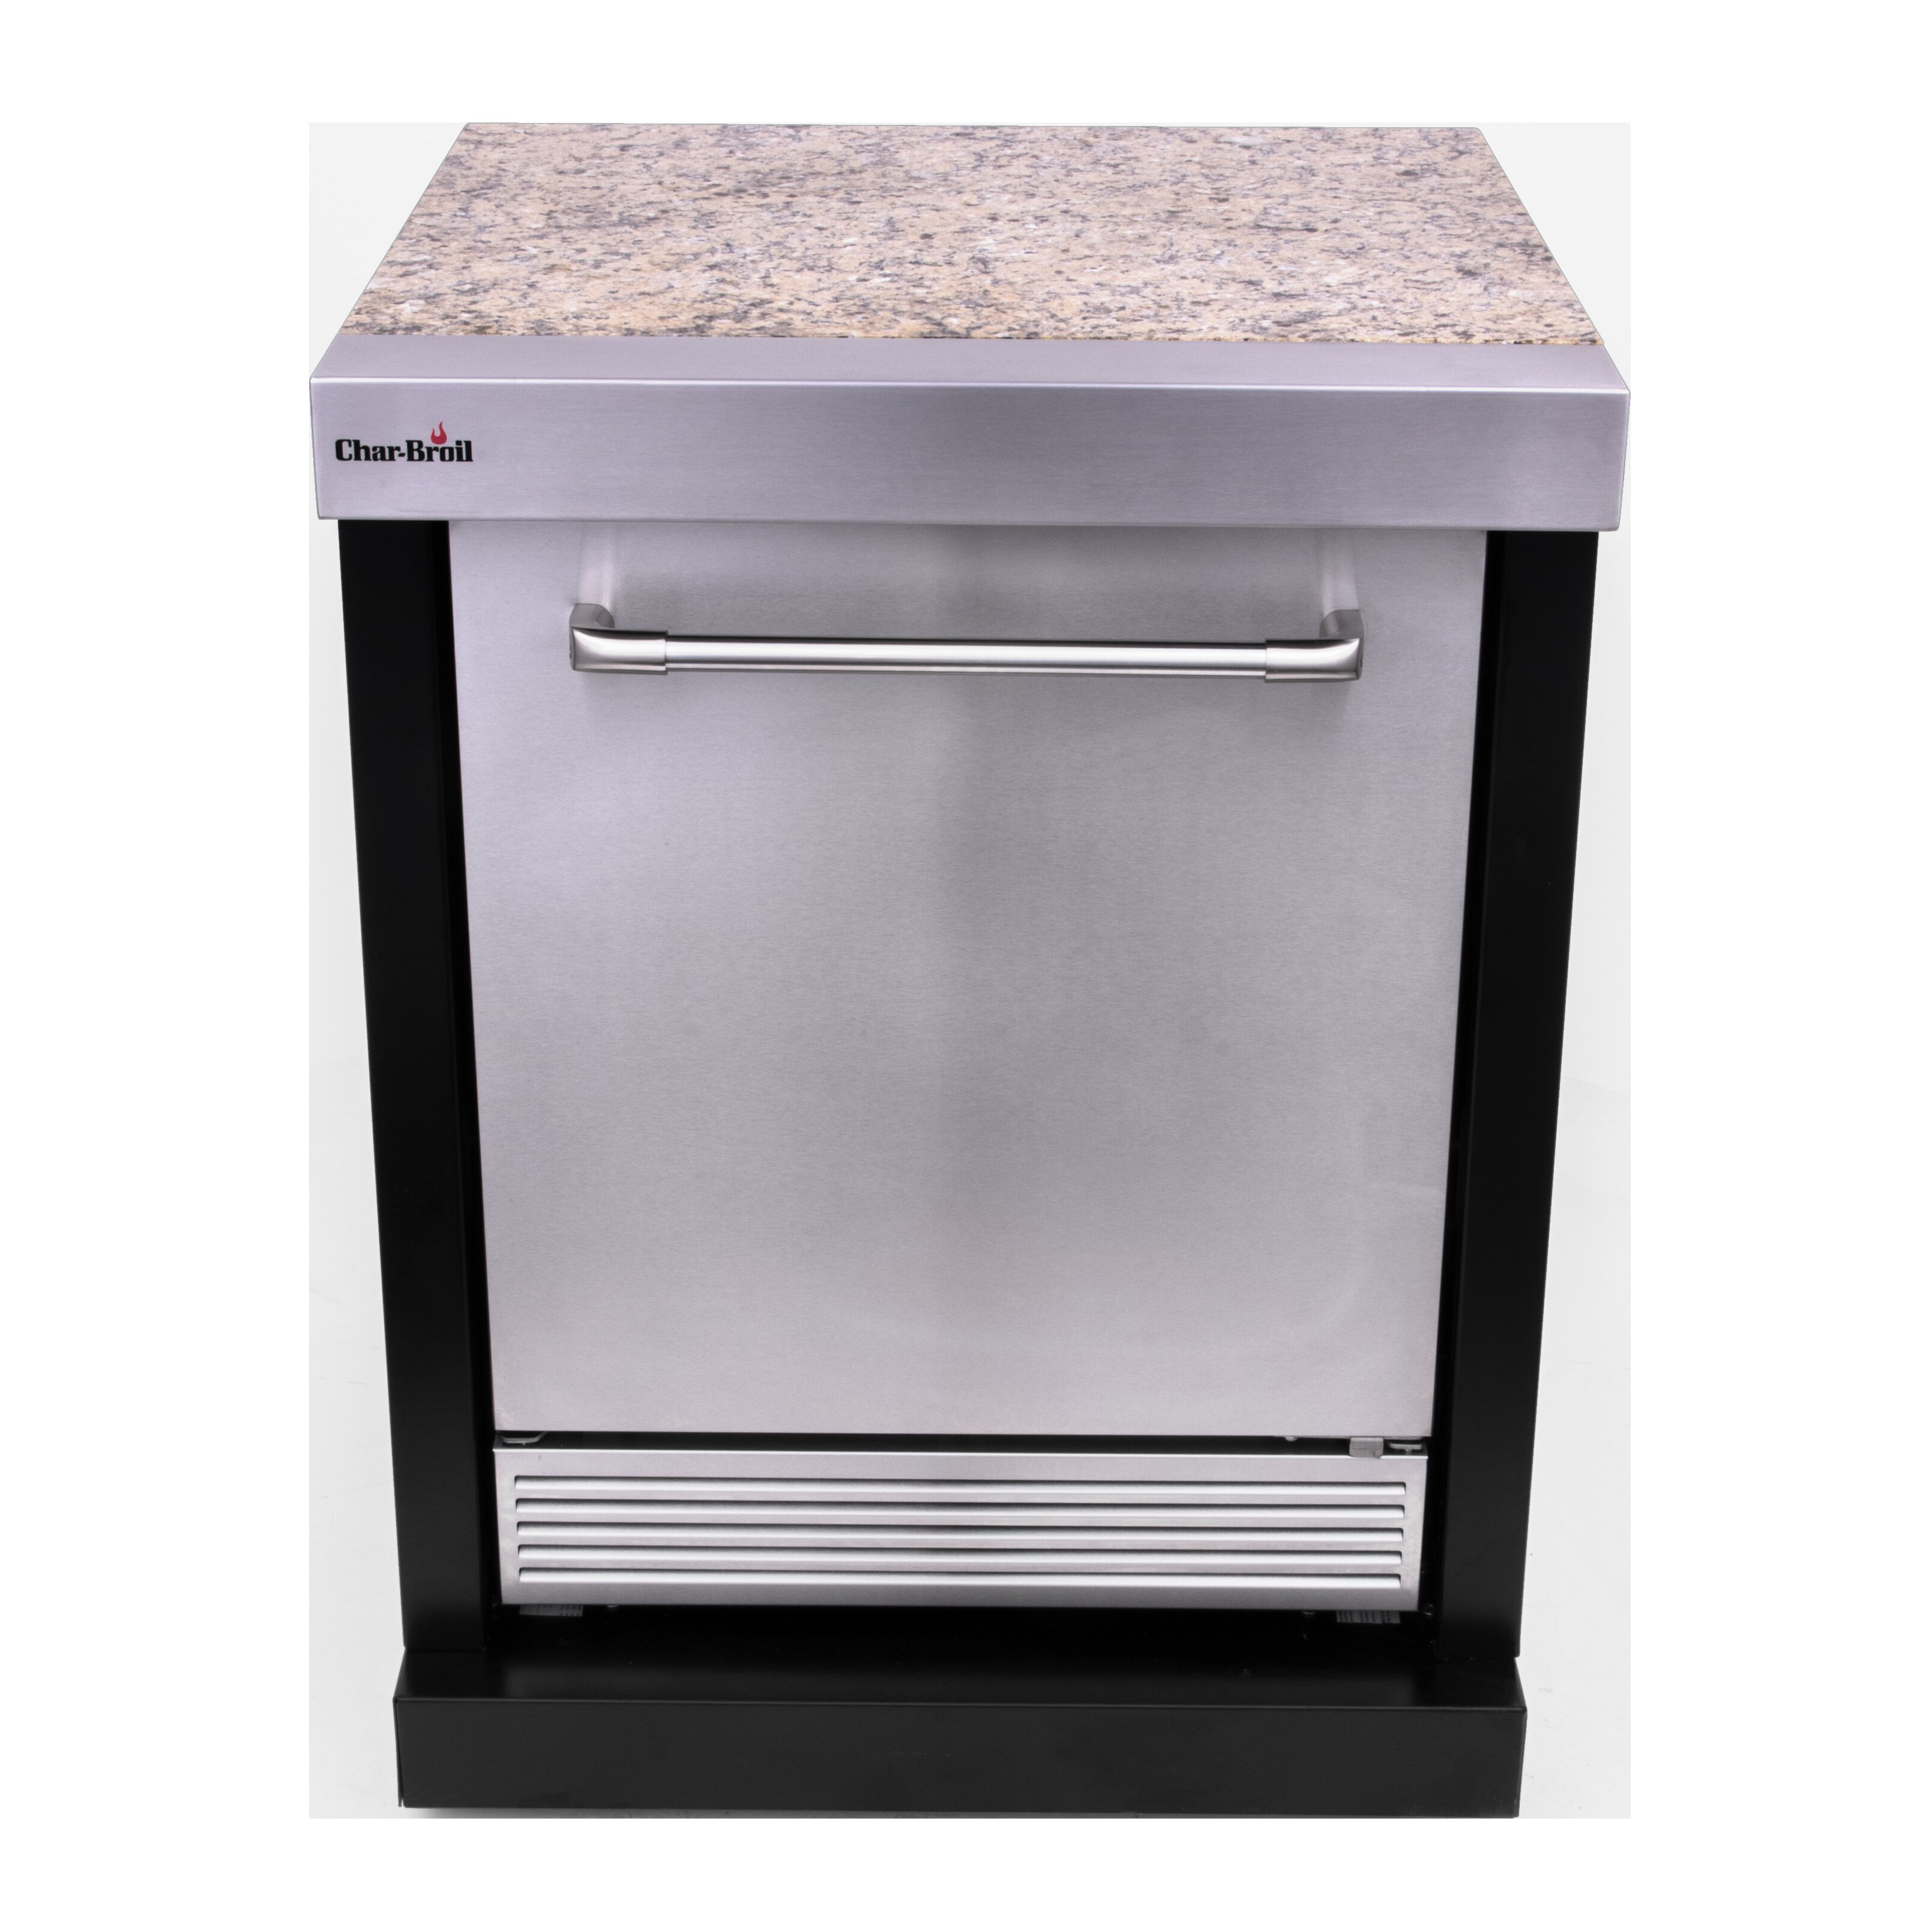 Fobest 7 Piece Modular Stainless Steel Outdoor Kitchen Suite with Under  Counter Refrigerator Drawer